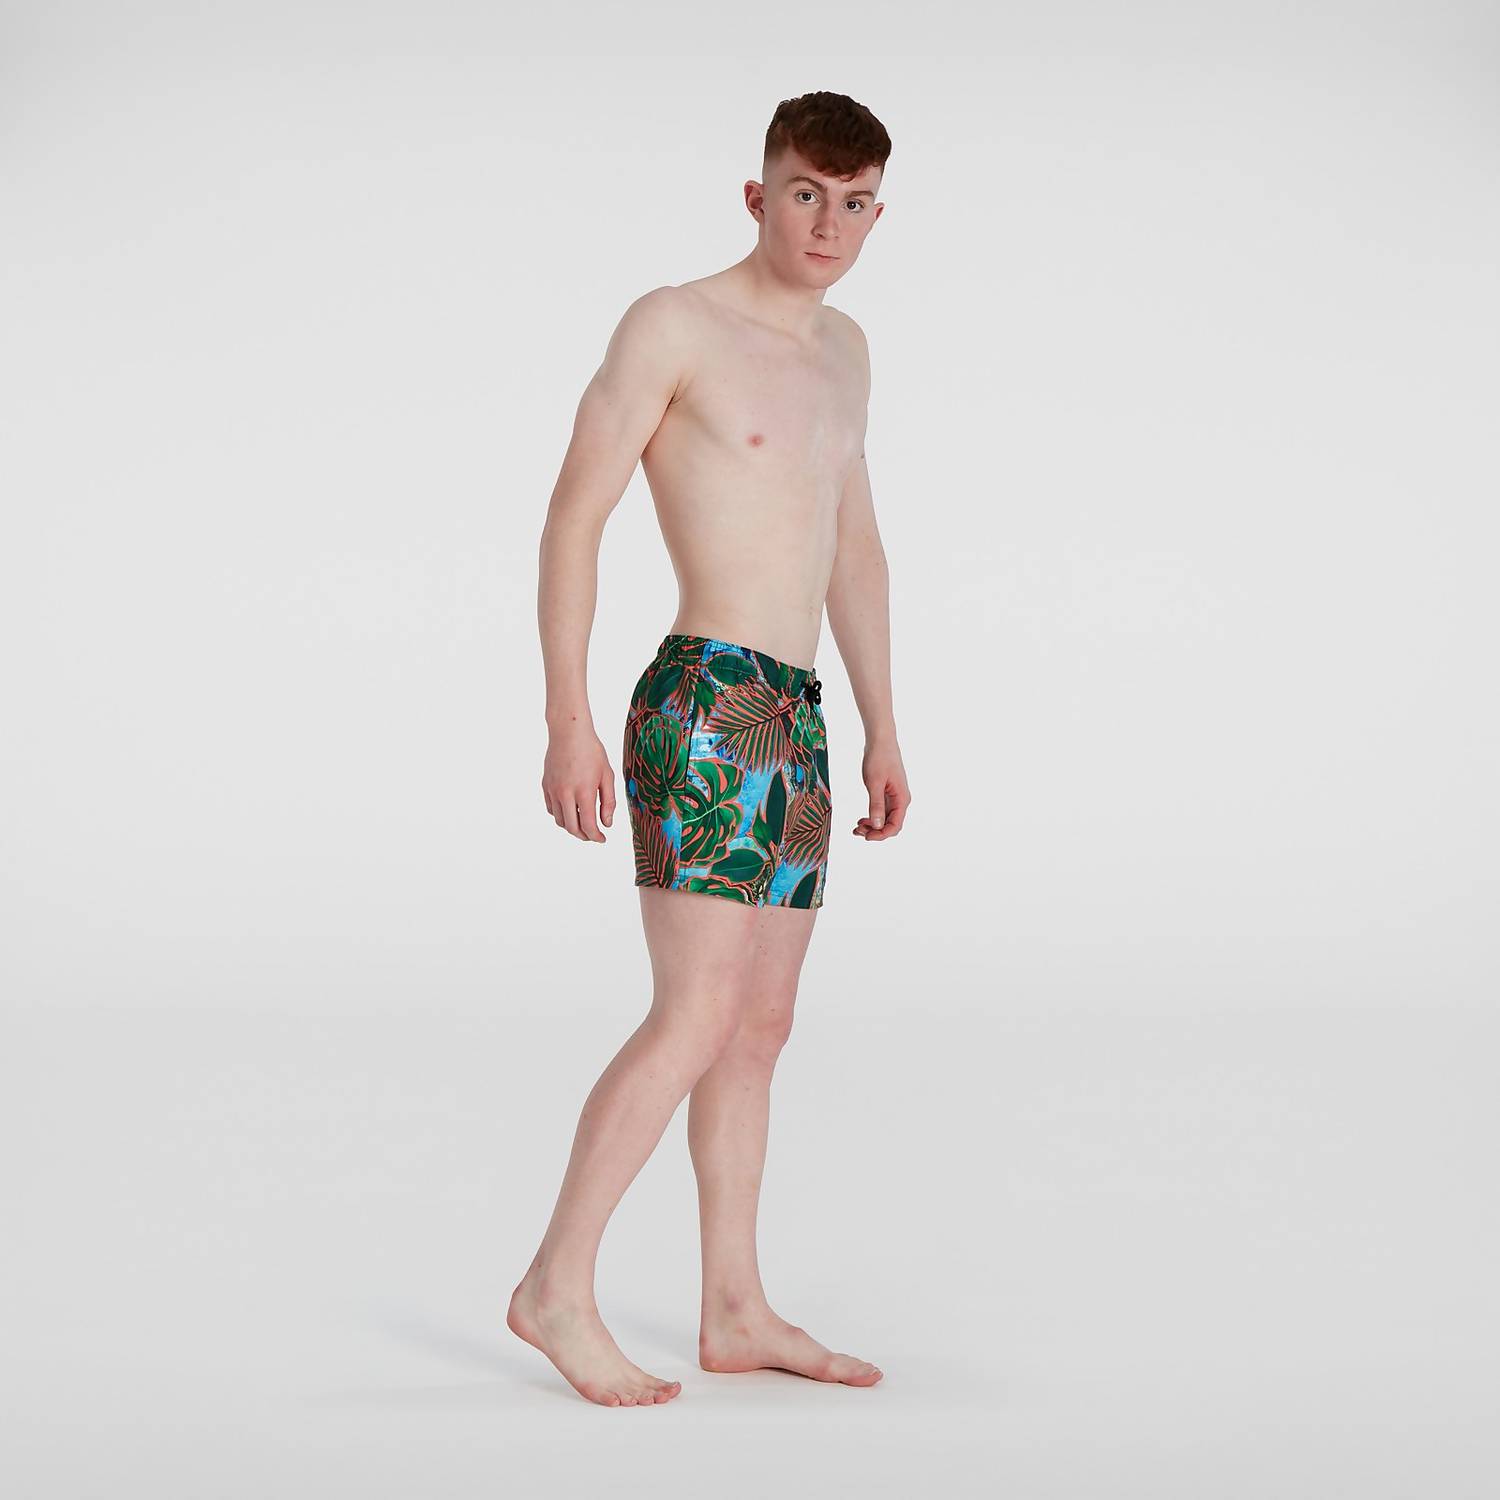 Short De Bain Homme Digital Printed Leisure 35 Cm Vert/Rouge Shorts De Bain Speedo Hommes – 2